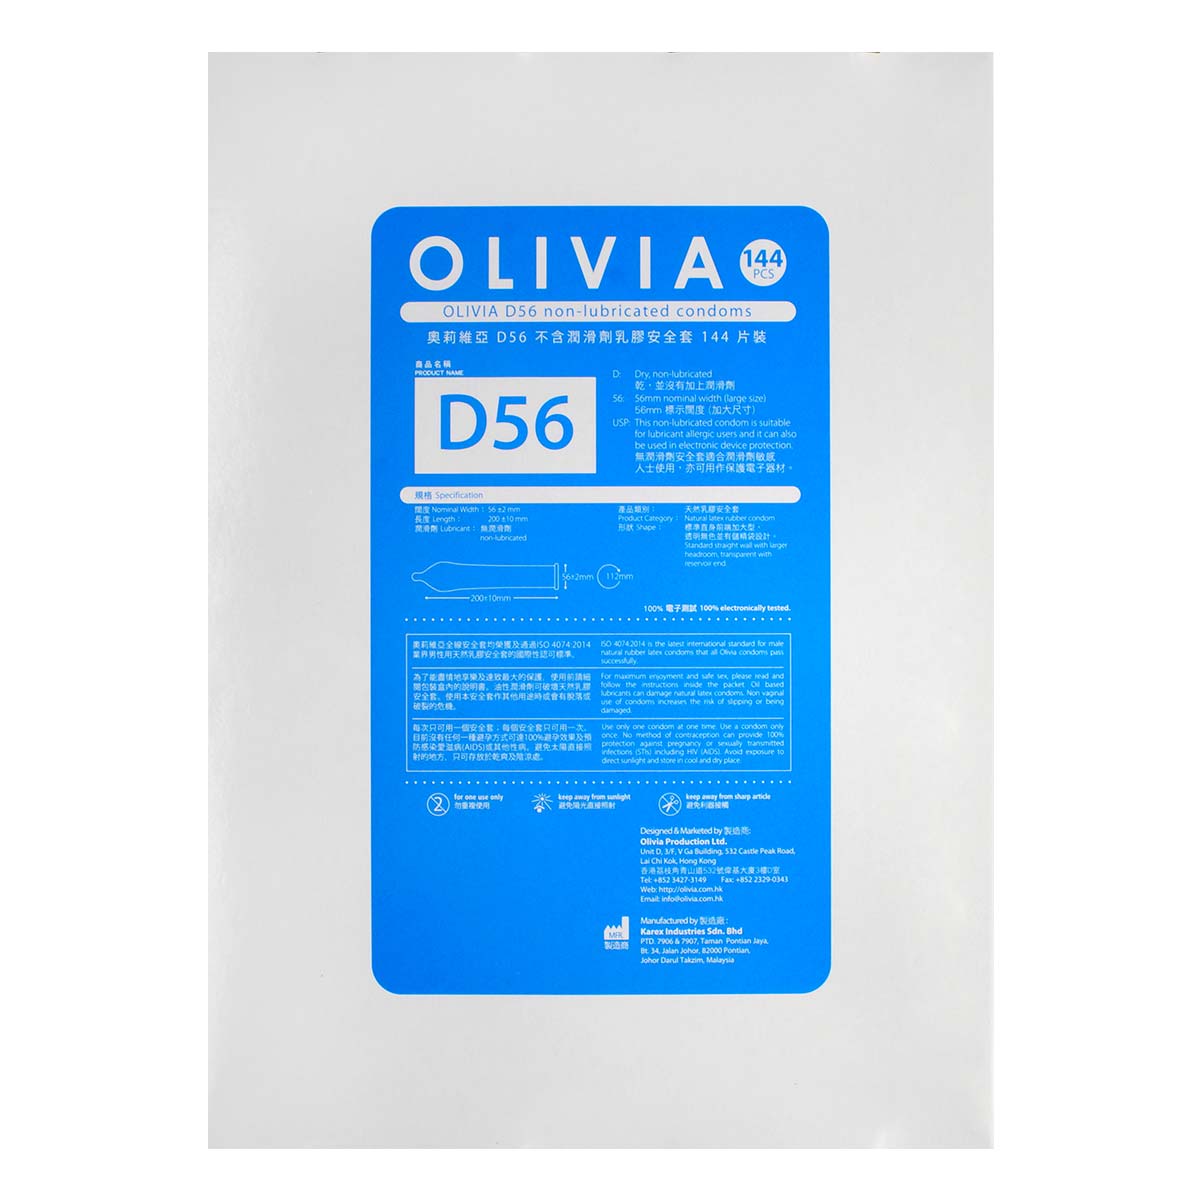 Olivia D56 non-lubricated 56mm 144 pieces bulk pack Latex Condom-p_3